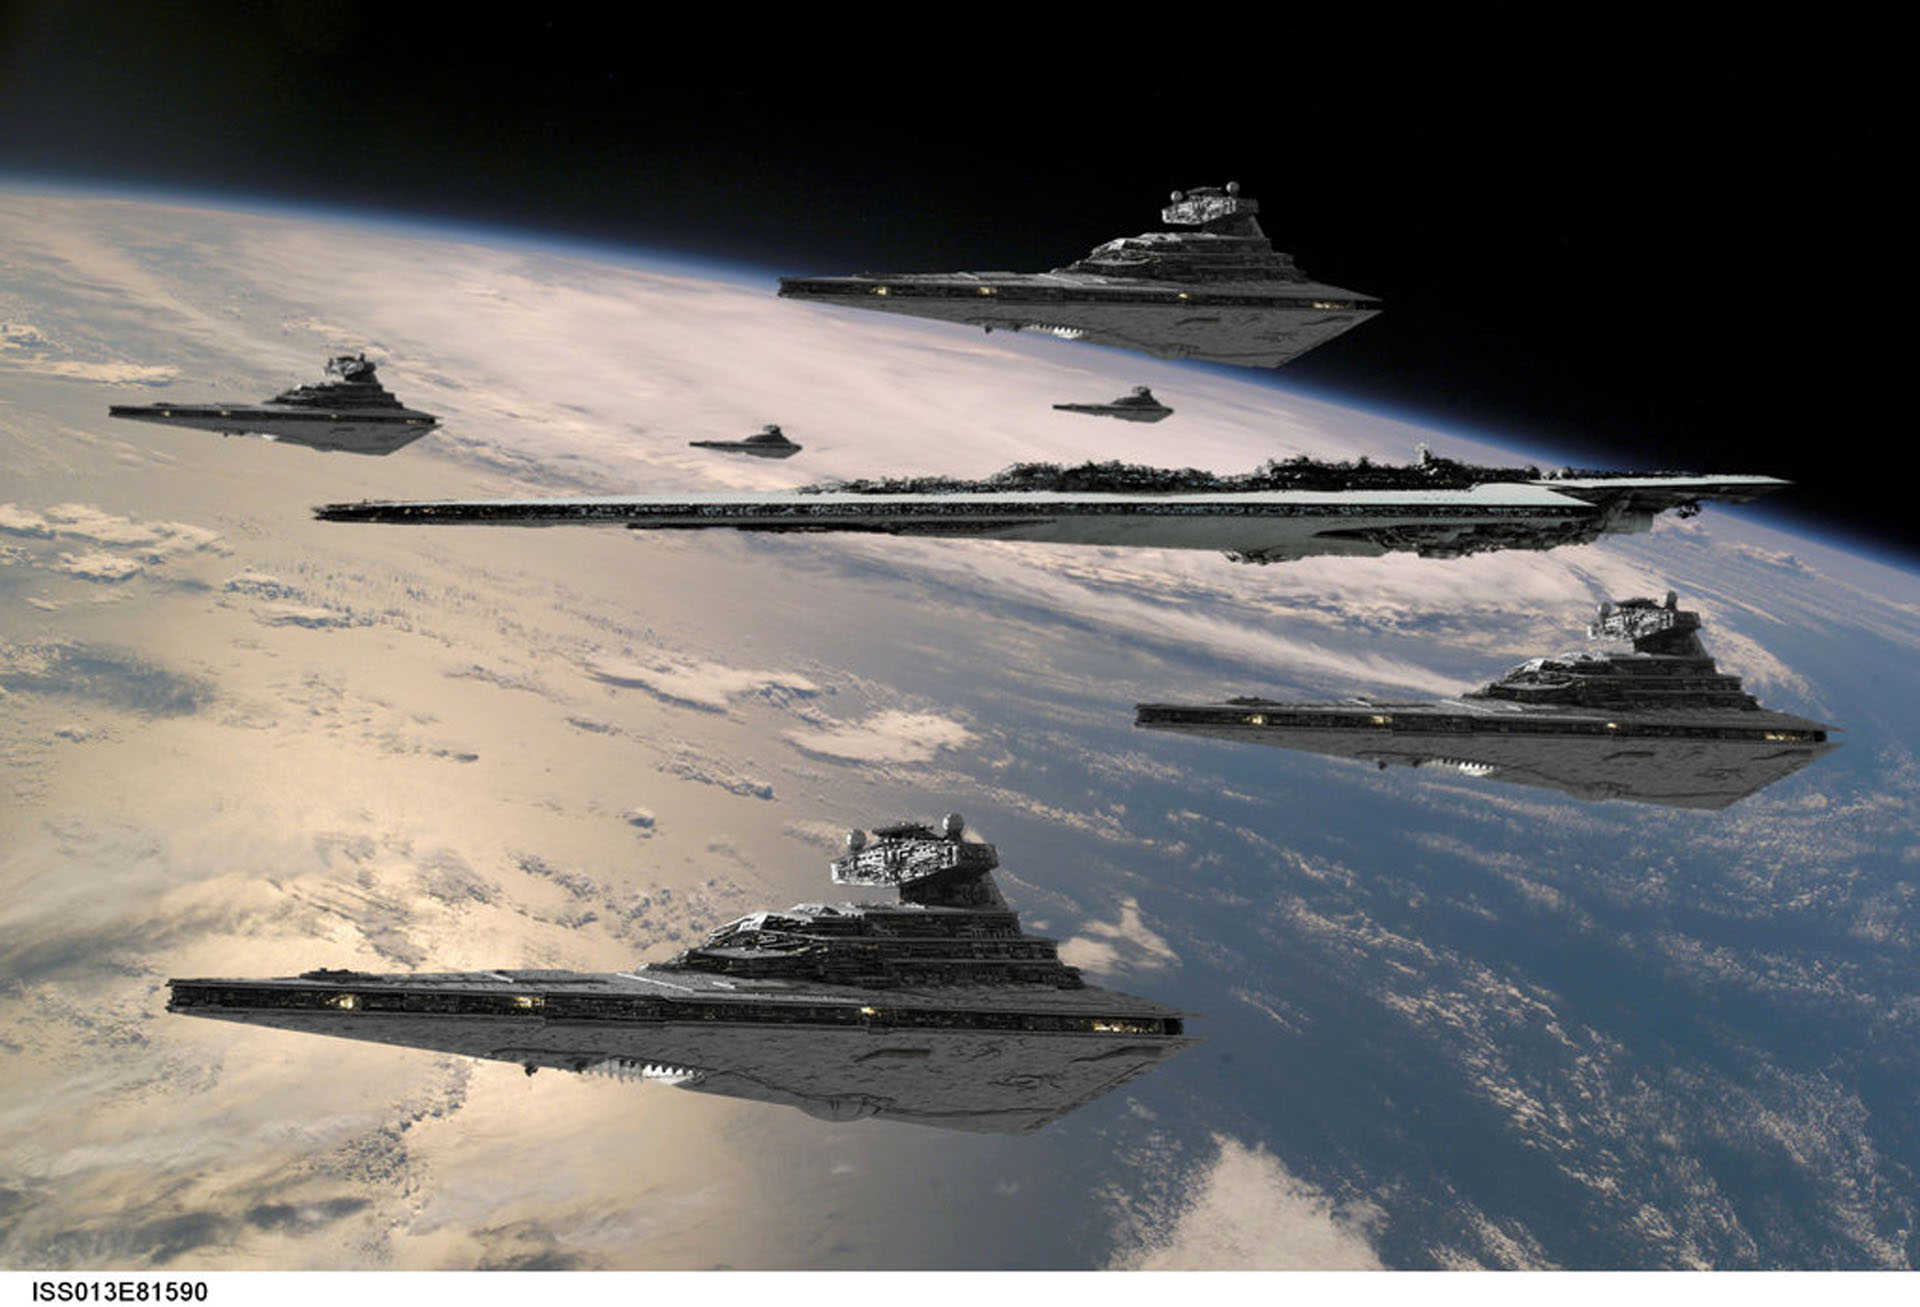 Sci Fi Star Wars Picture